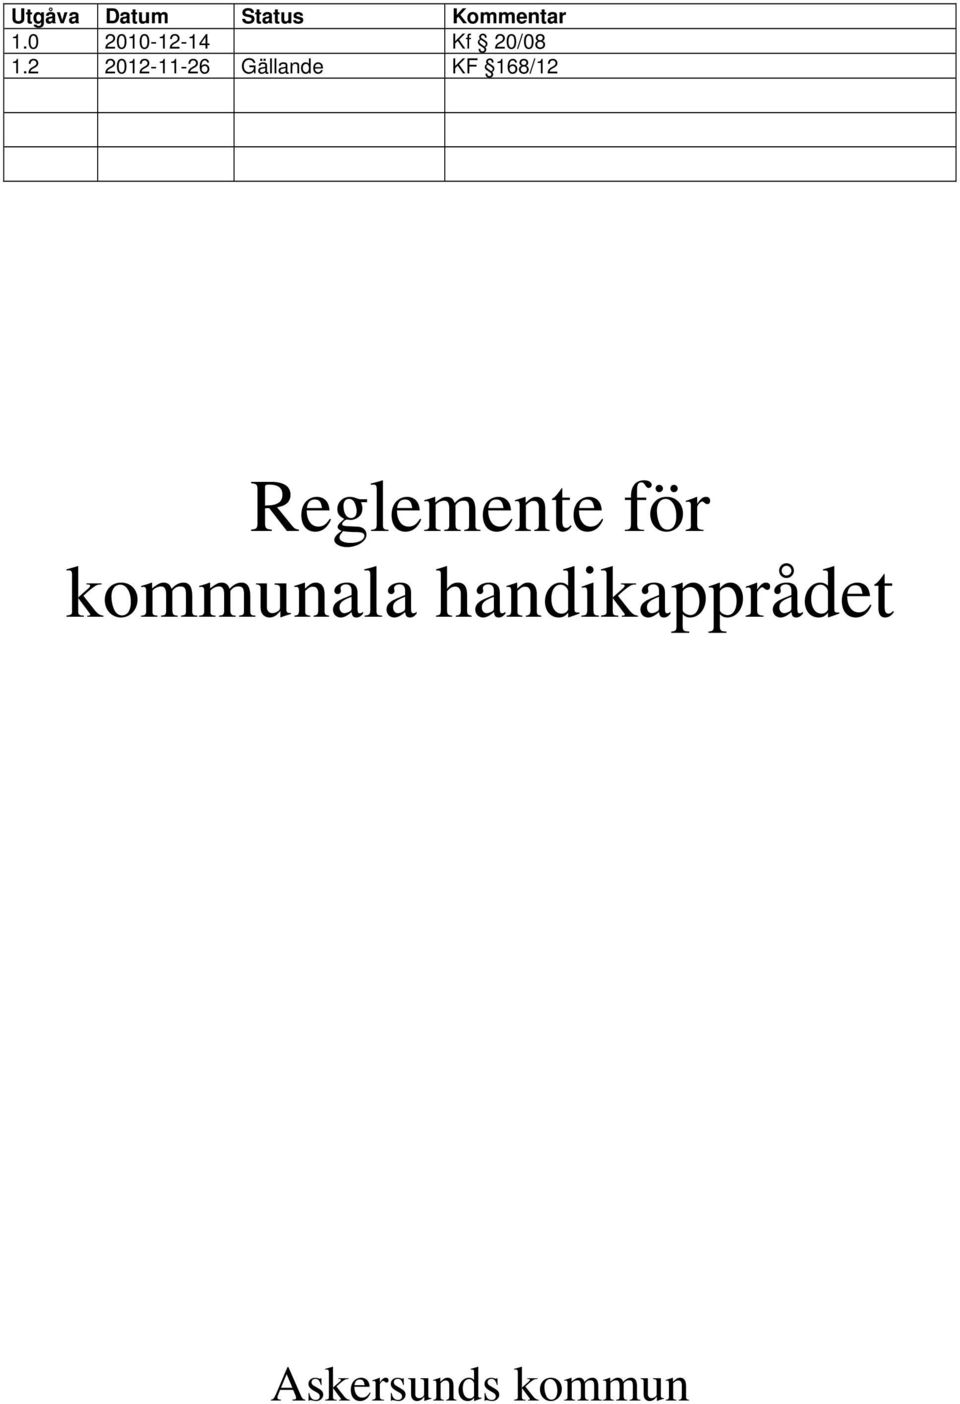 2 2012-11-26 Gällande KF 168/12